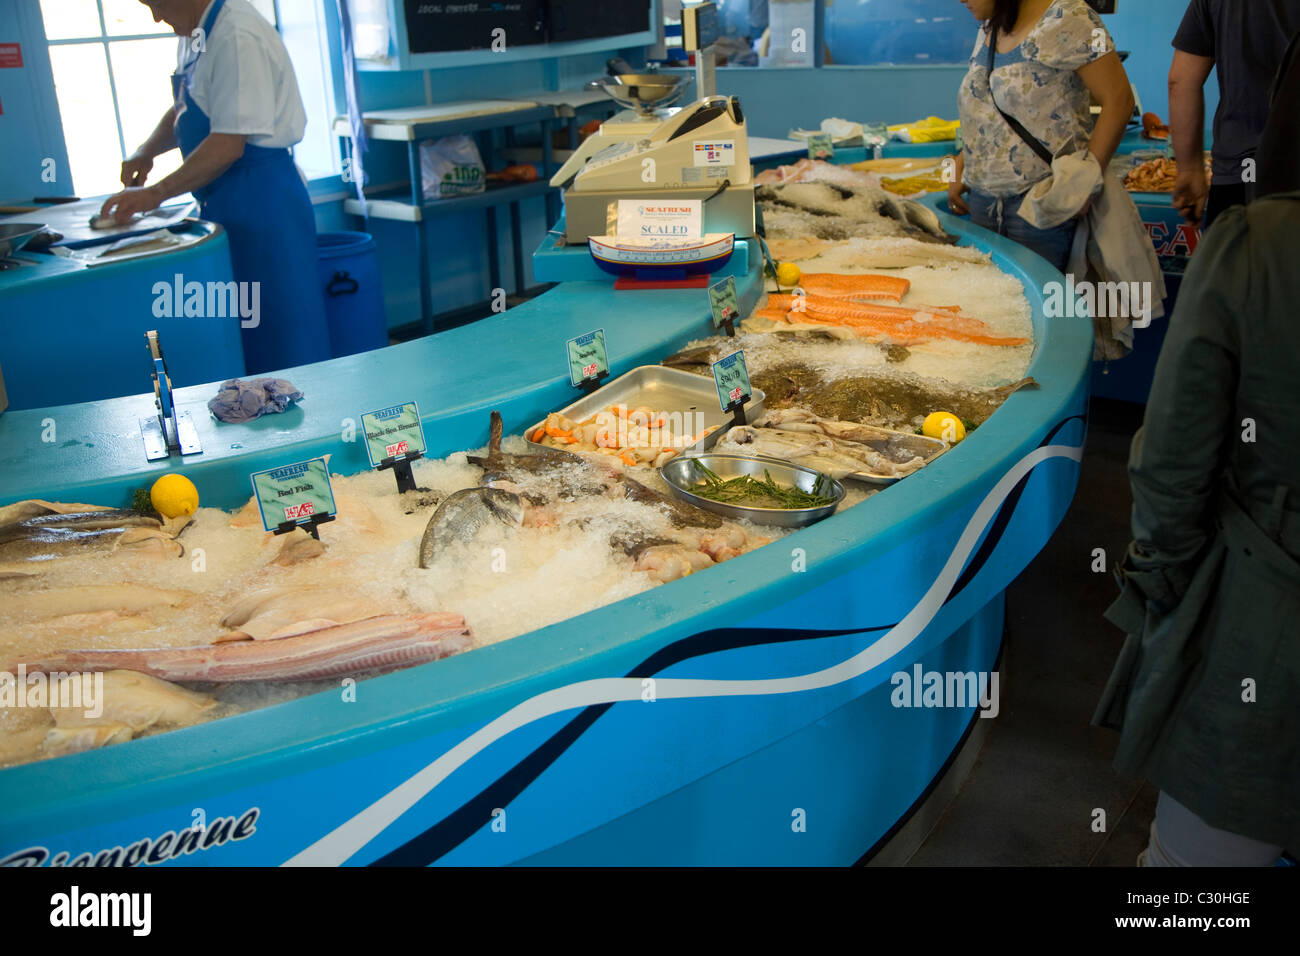 Pesce fresco nelle pescherie shop St Peter Port Guernsey nelle isole del Canale Foto Stock